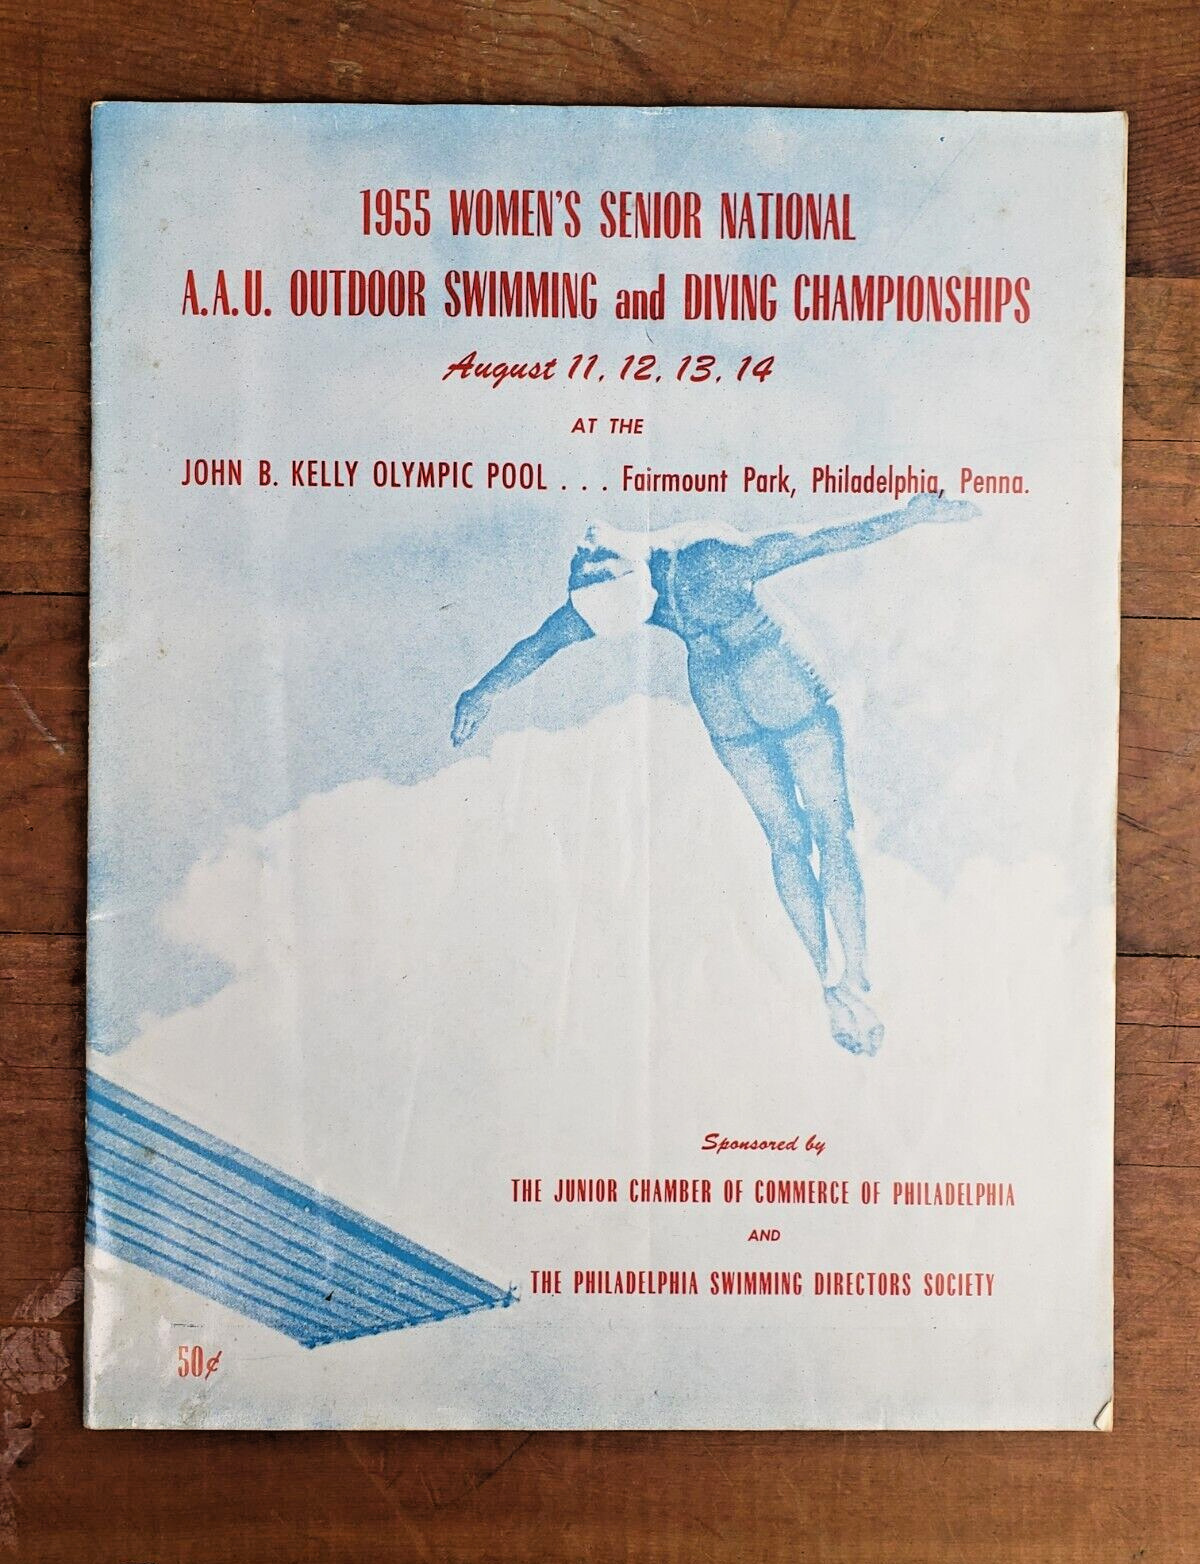 1955 National AAU Senior Women's Outdoor Swimming & Diving Championship Program